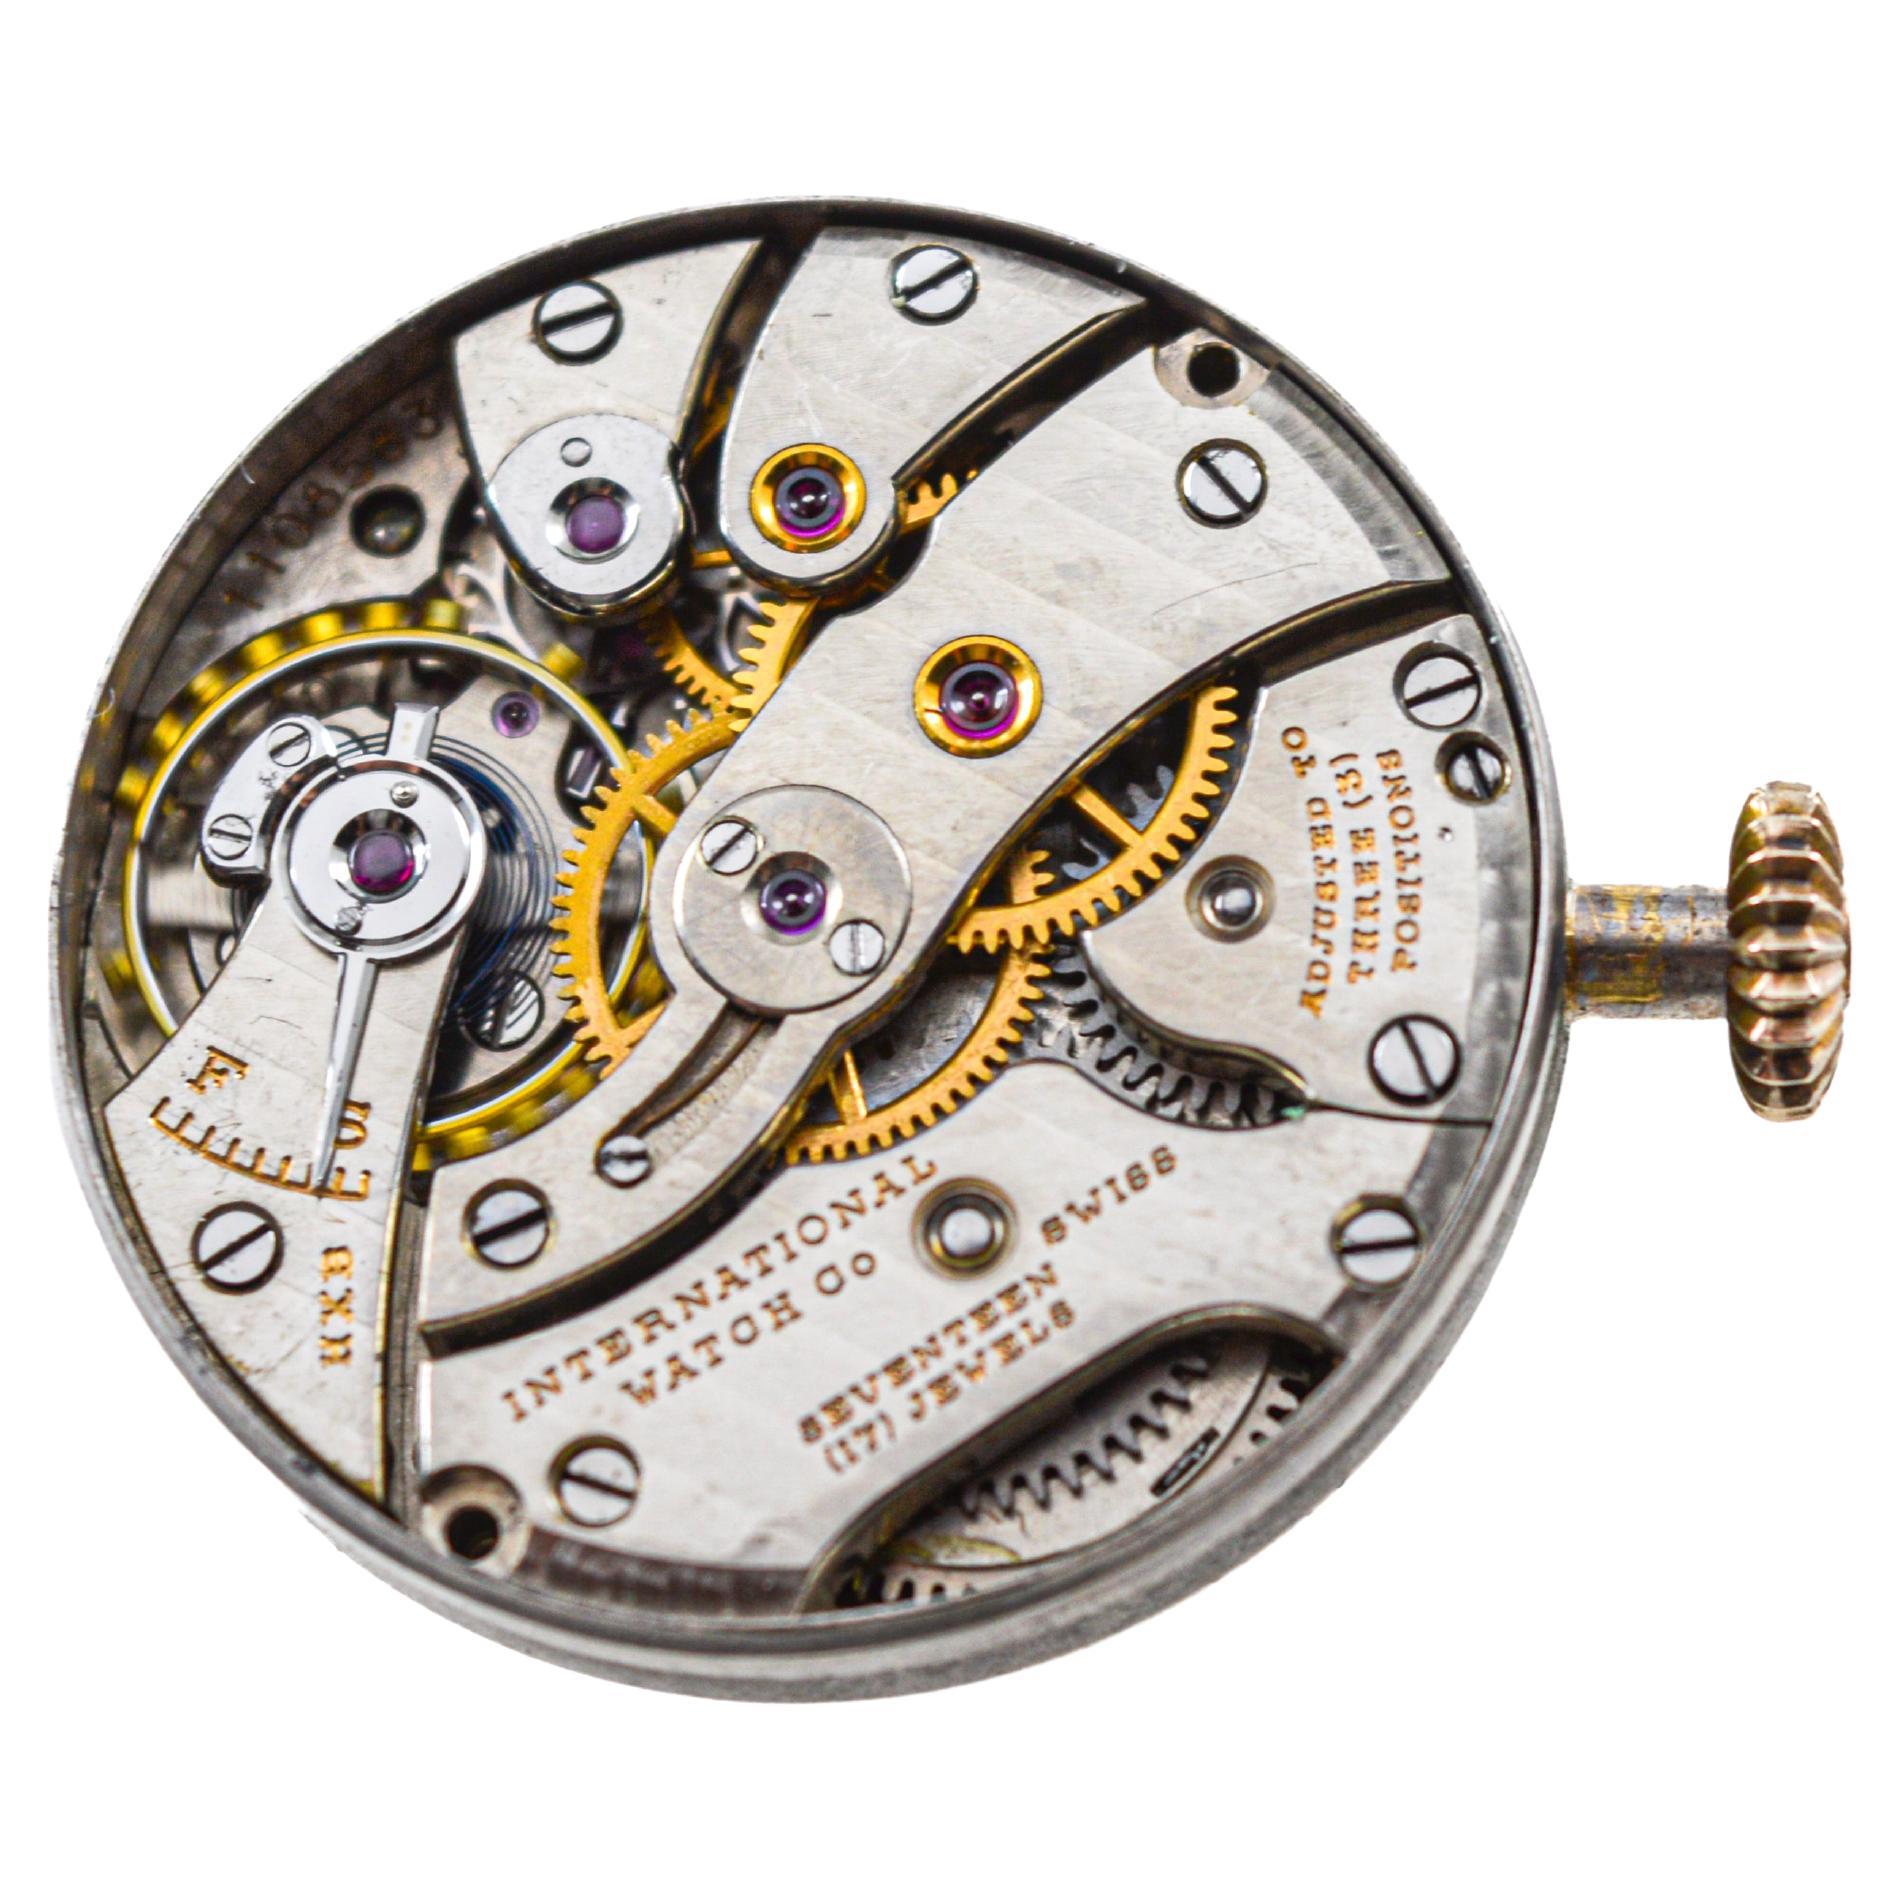 Tiffany & Co. by Schaffhausen International Watch Company Art Deco Style Watch For Sale 14